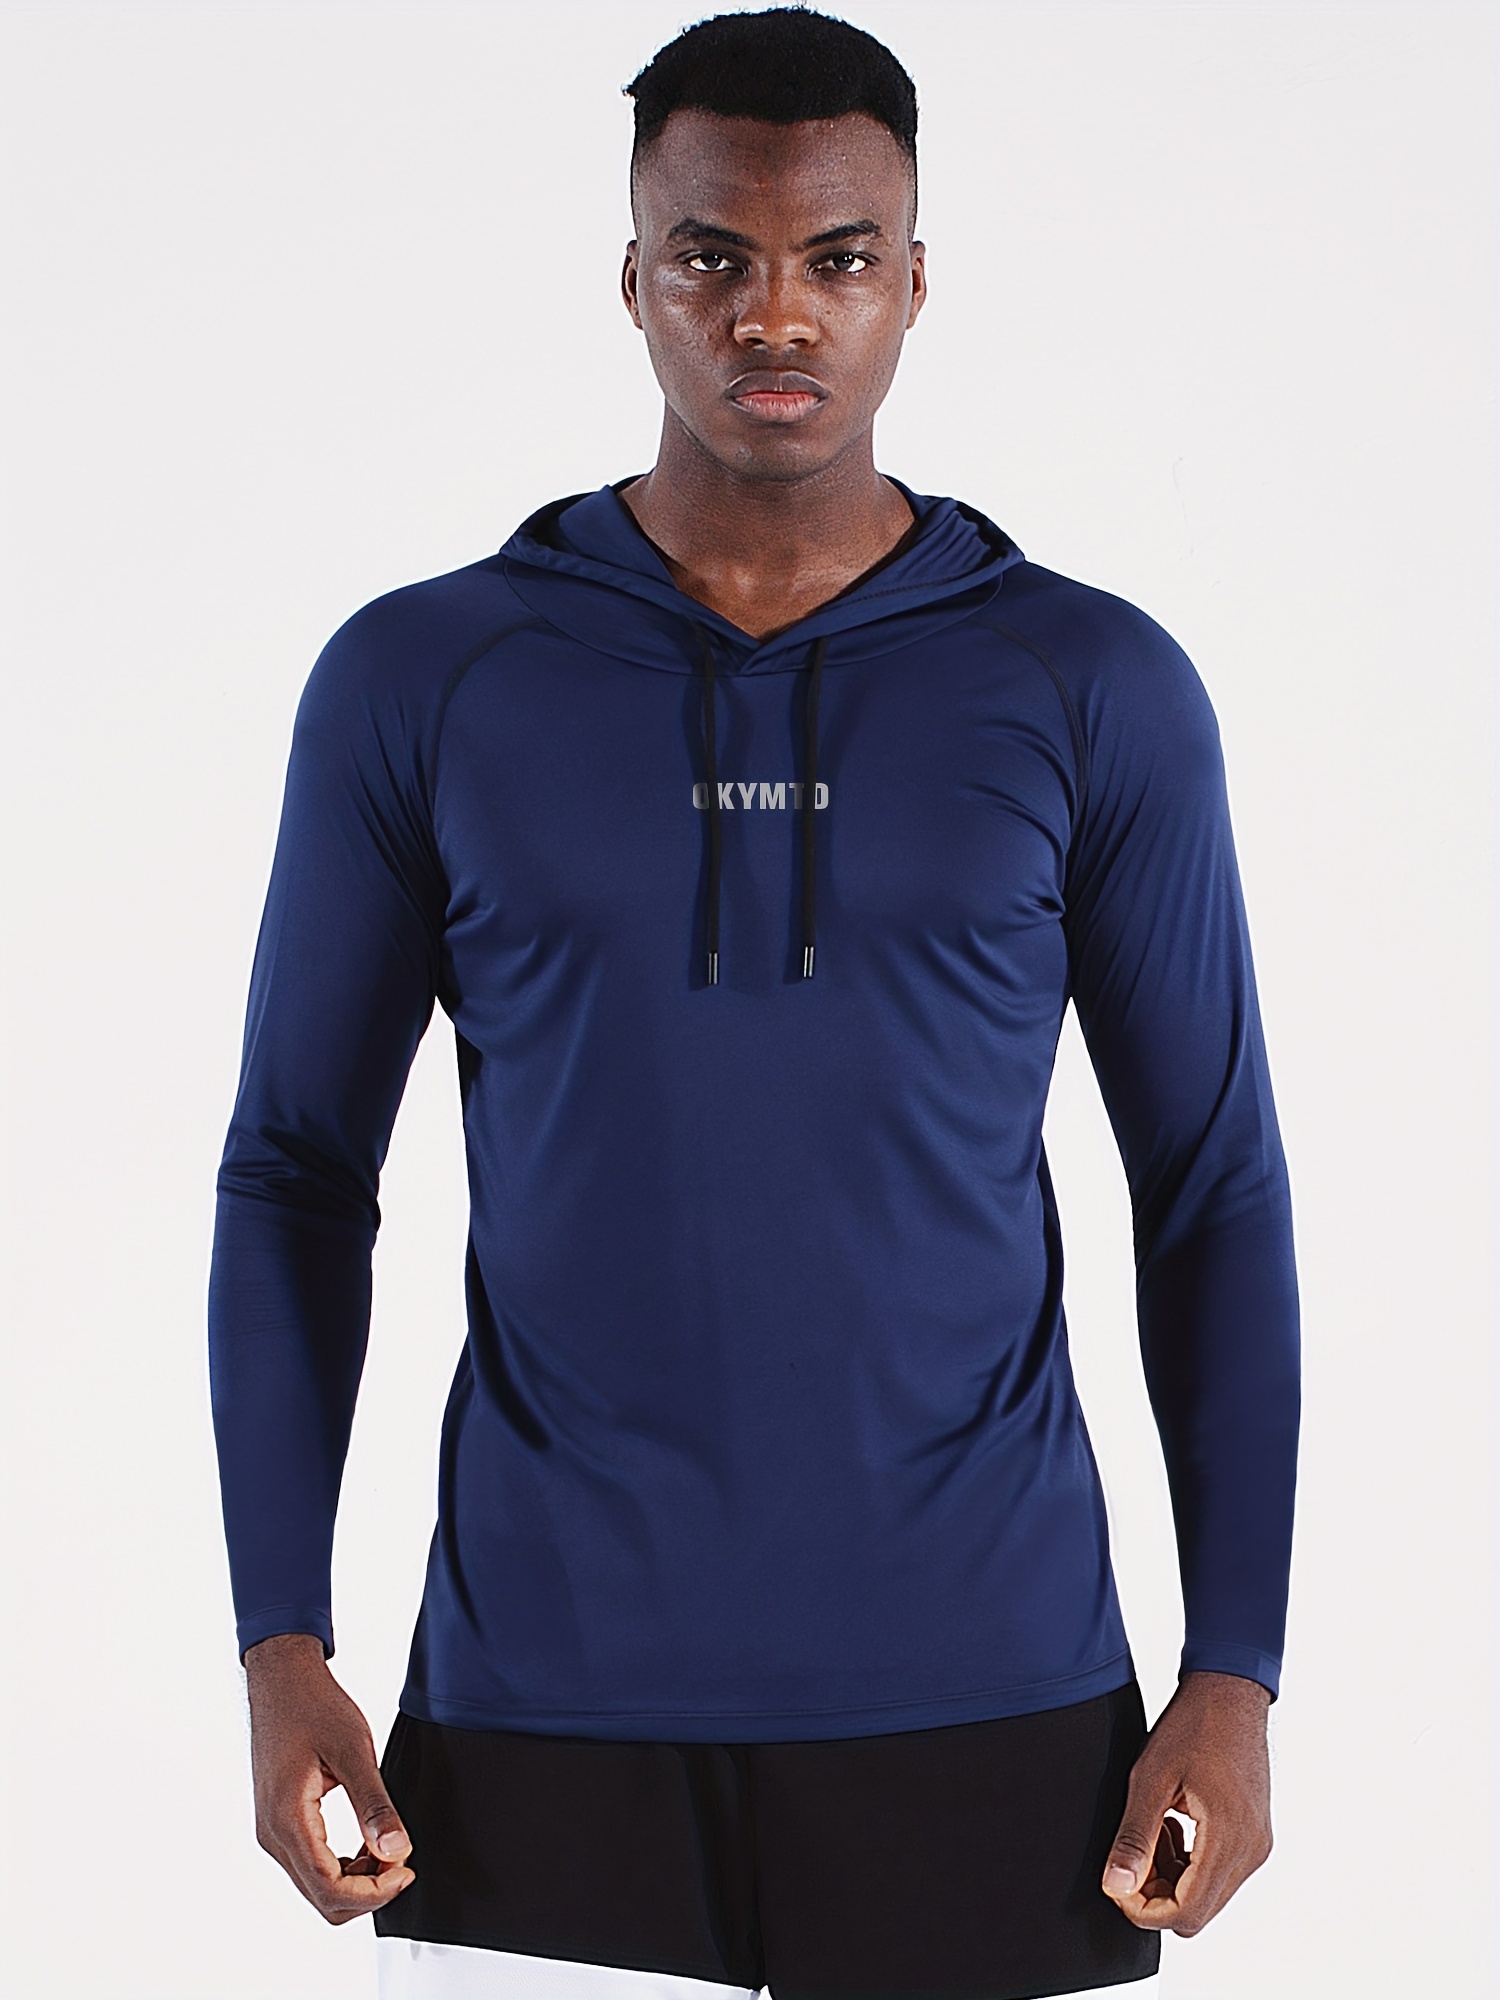 Solid Hooded Uv Protection Light, Men's Breathable Dry Gym Running Basketball Light